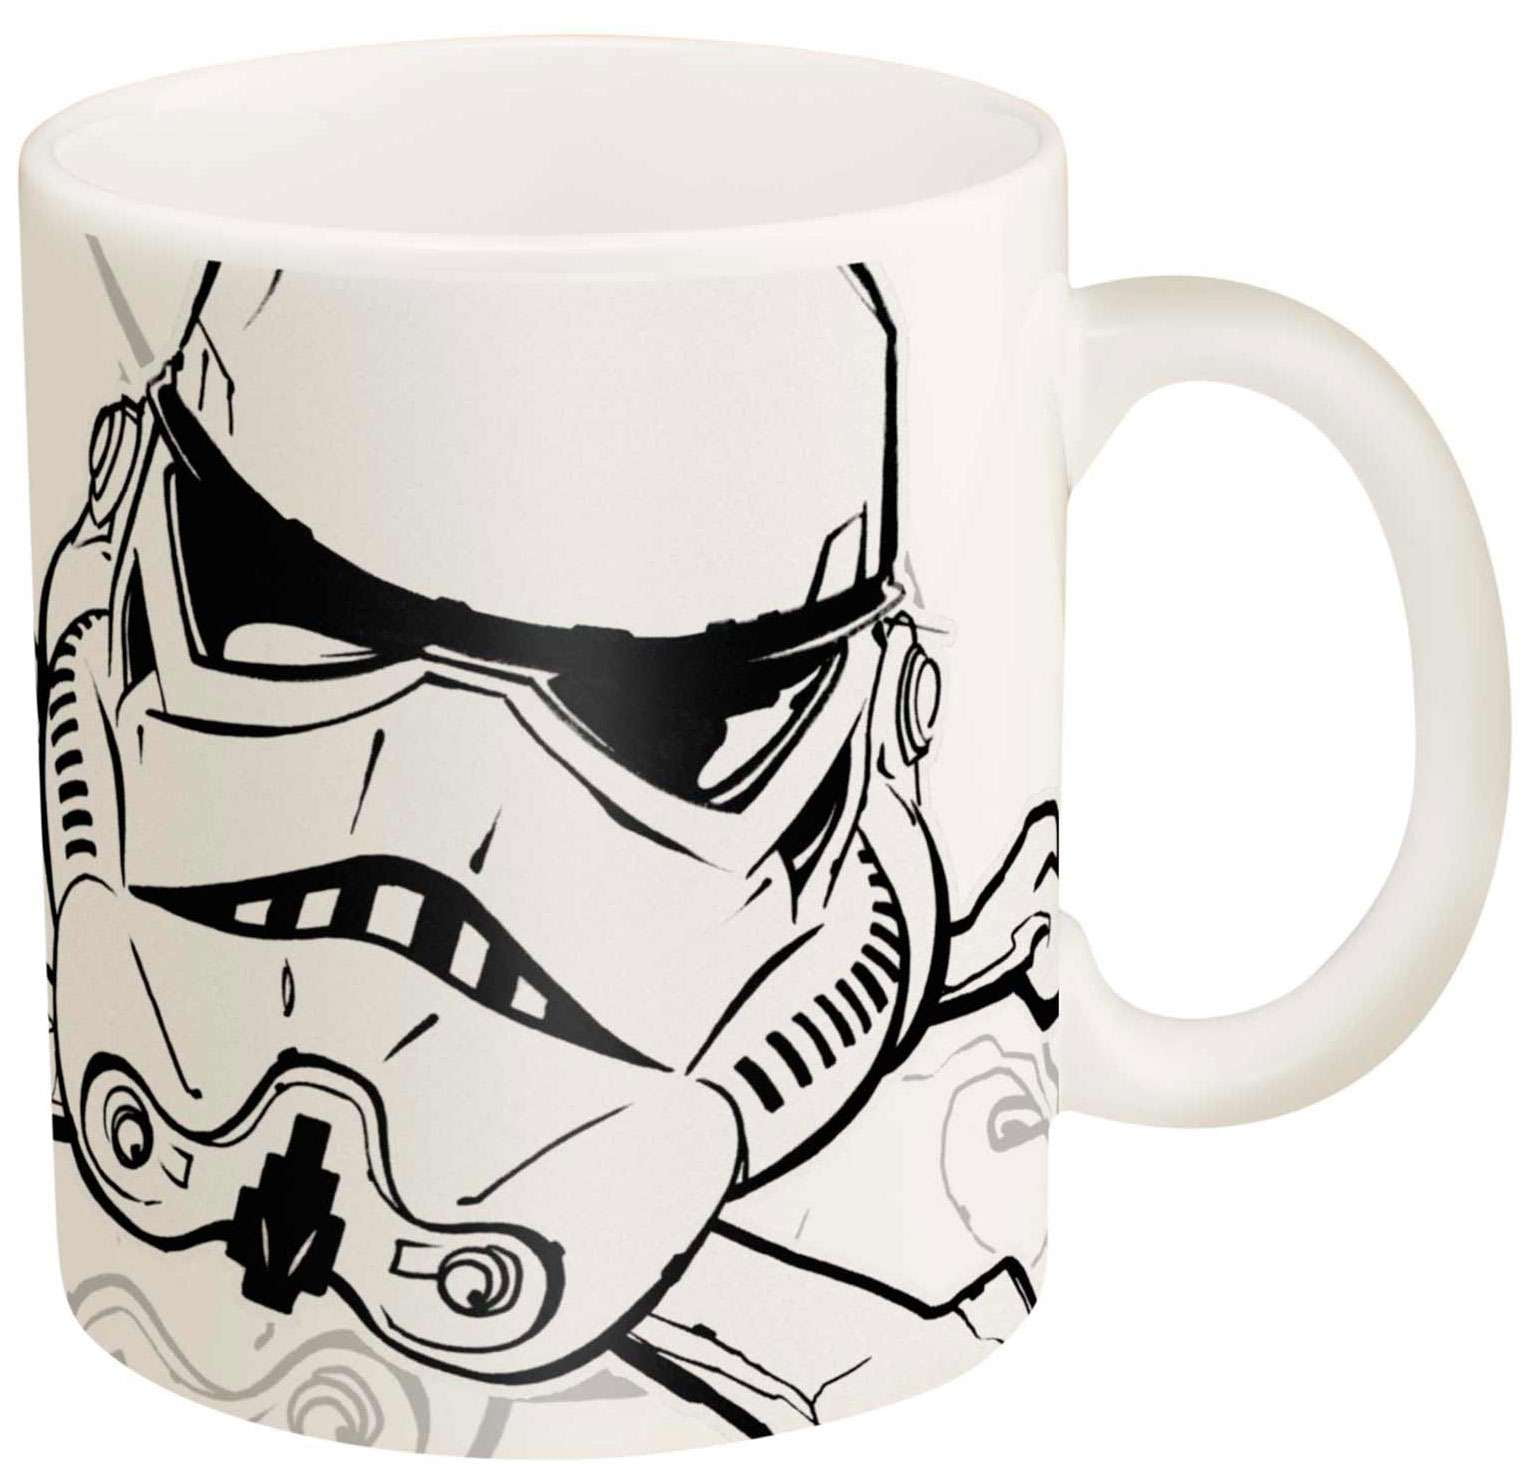 Han Solo /& Darth Vader Coffee Mugs 11 oz Boba Fett Star Wars SWRR-4421 Luke Skywalker by Zak Designs